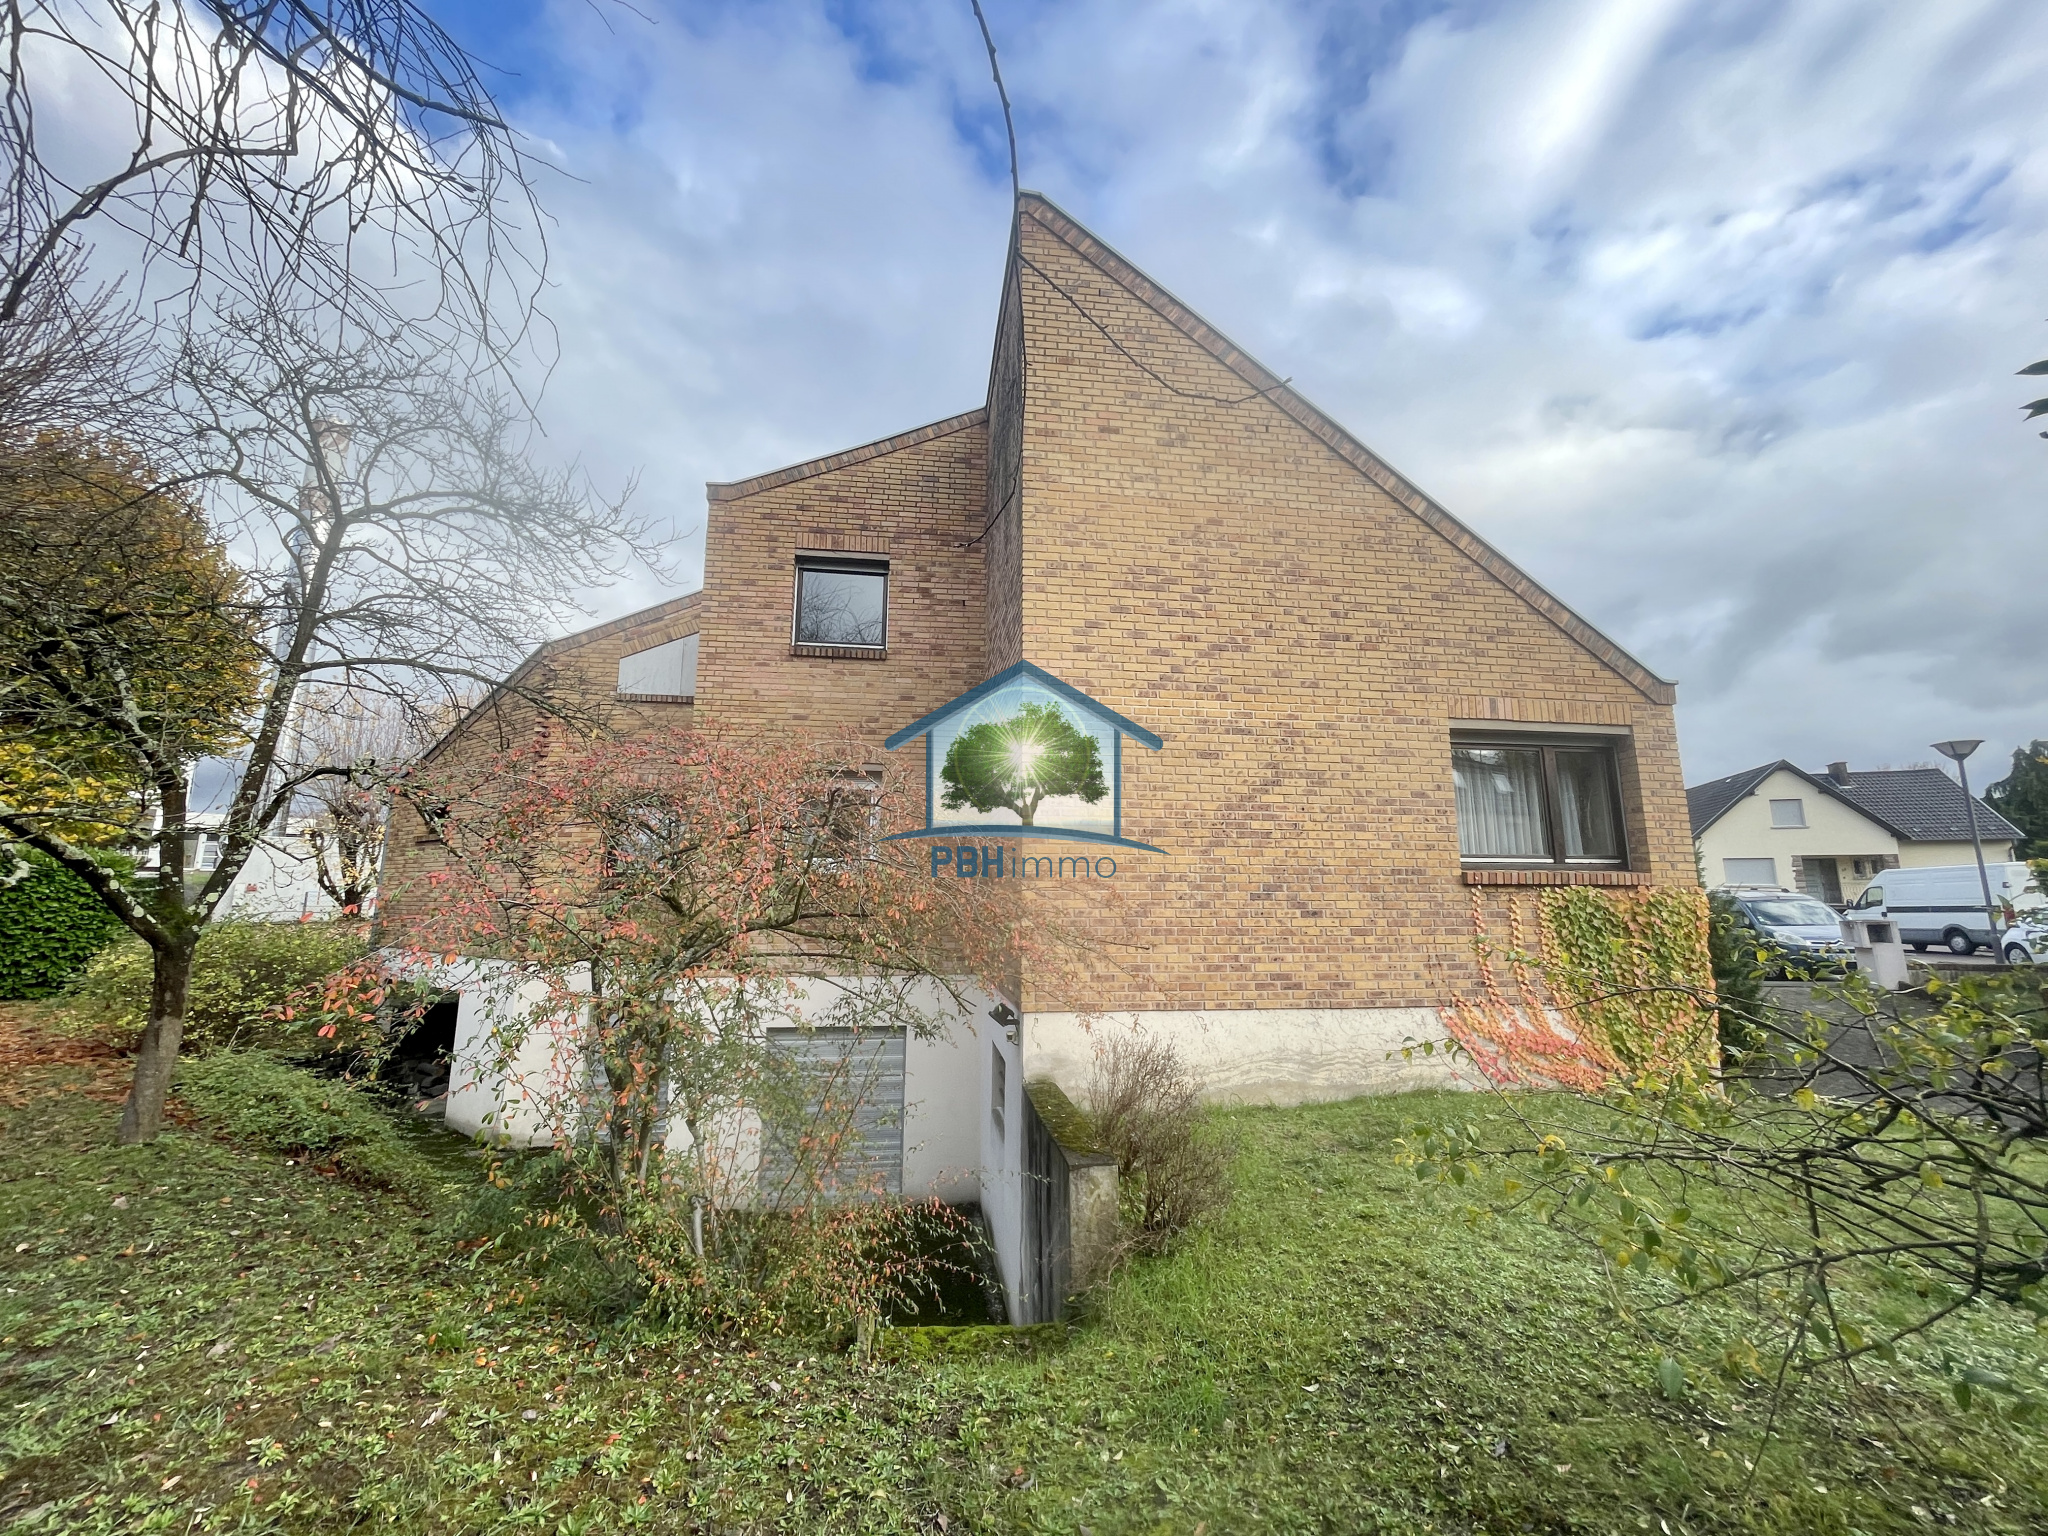 Vente Maison 183m² 7 Pièces à Illkirch-Graffenstaden (67400) - Pbh Immo